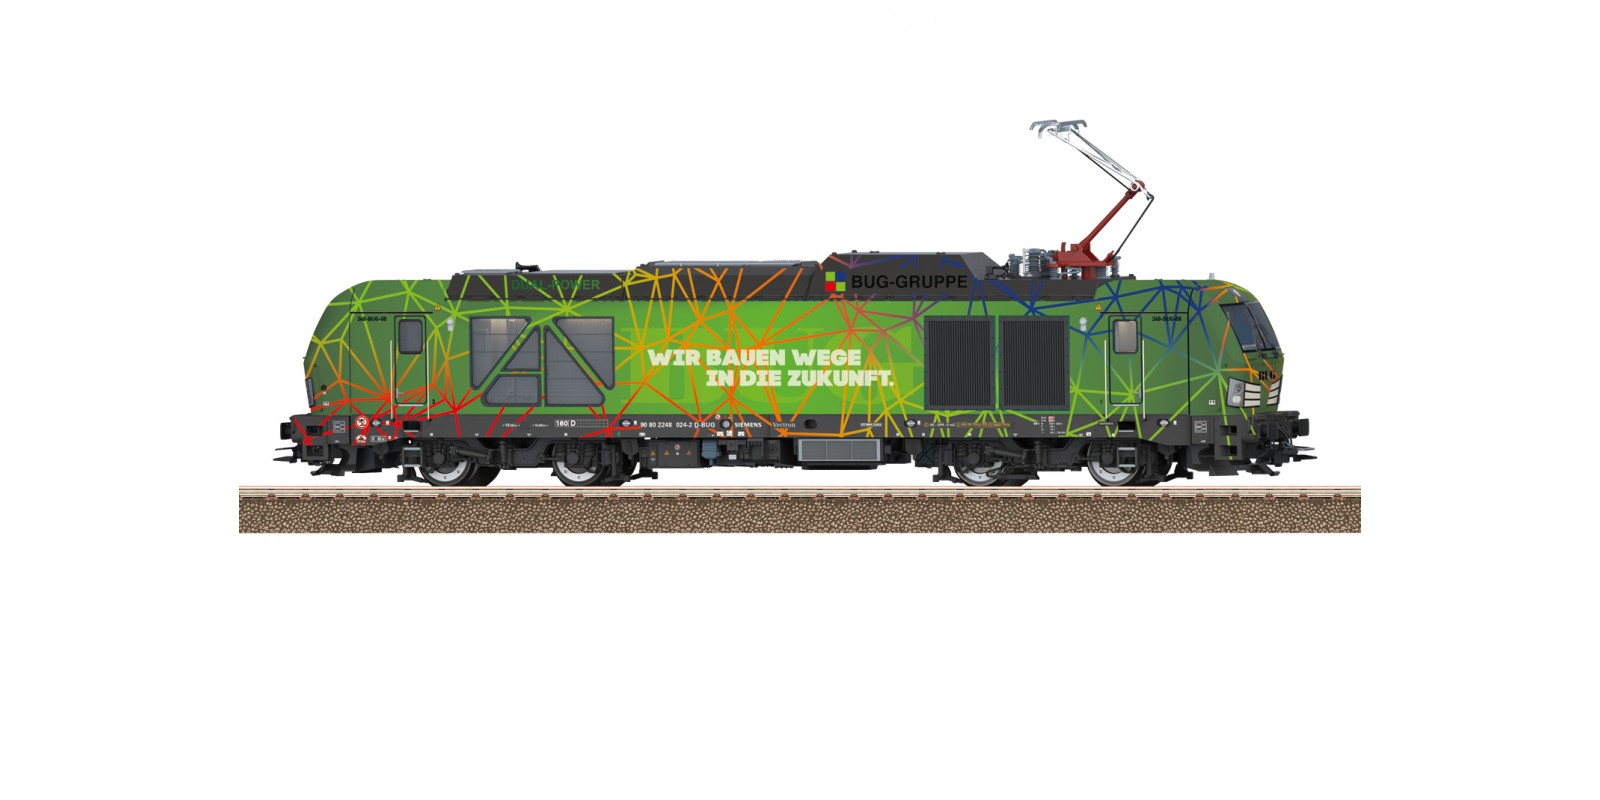 T25295 Class 248 Dual Power Locomotive